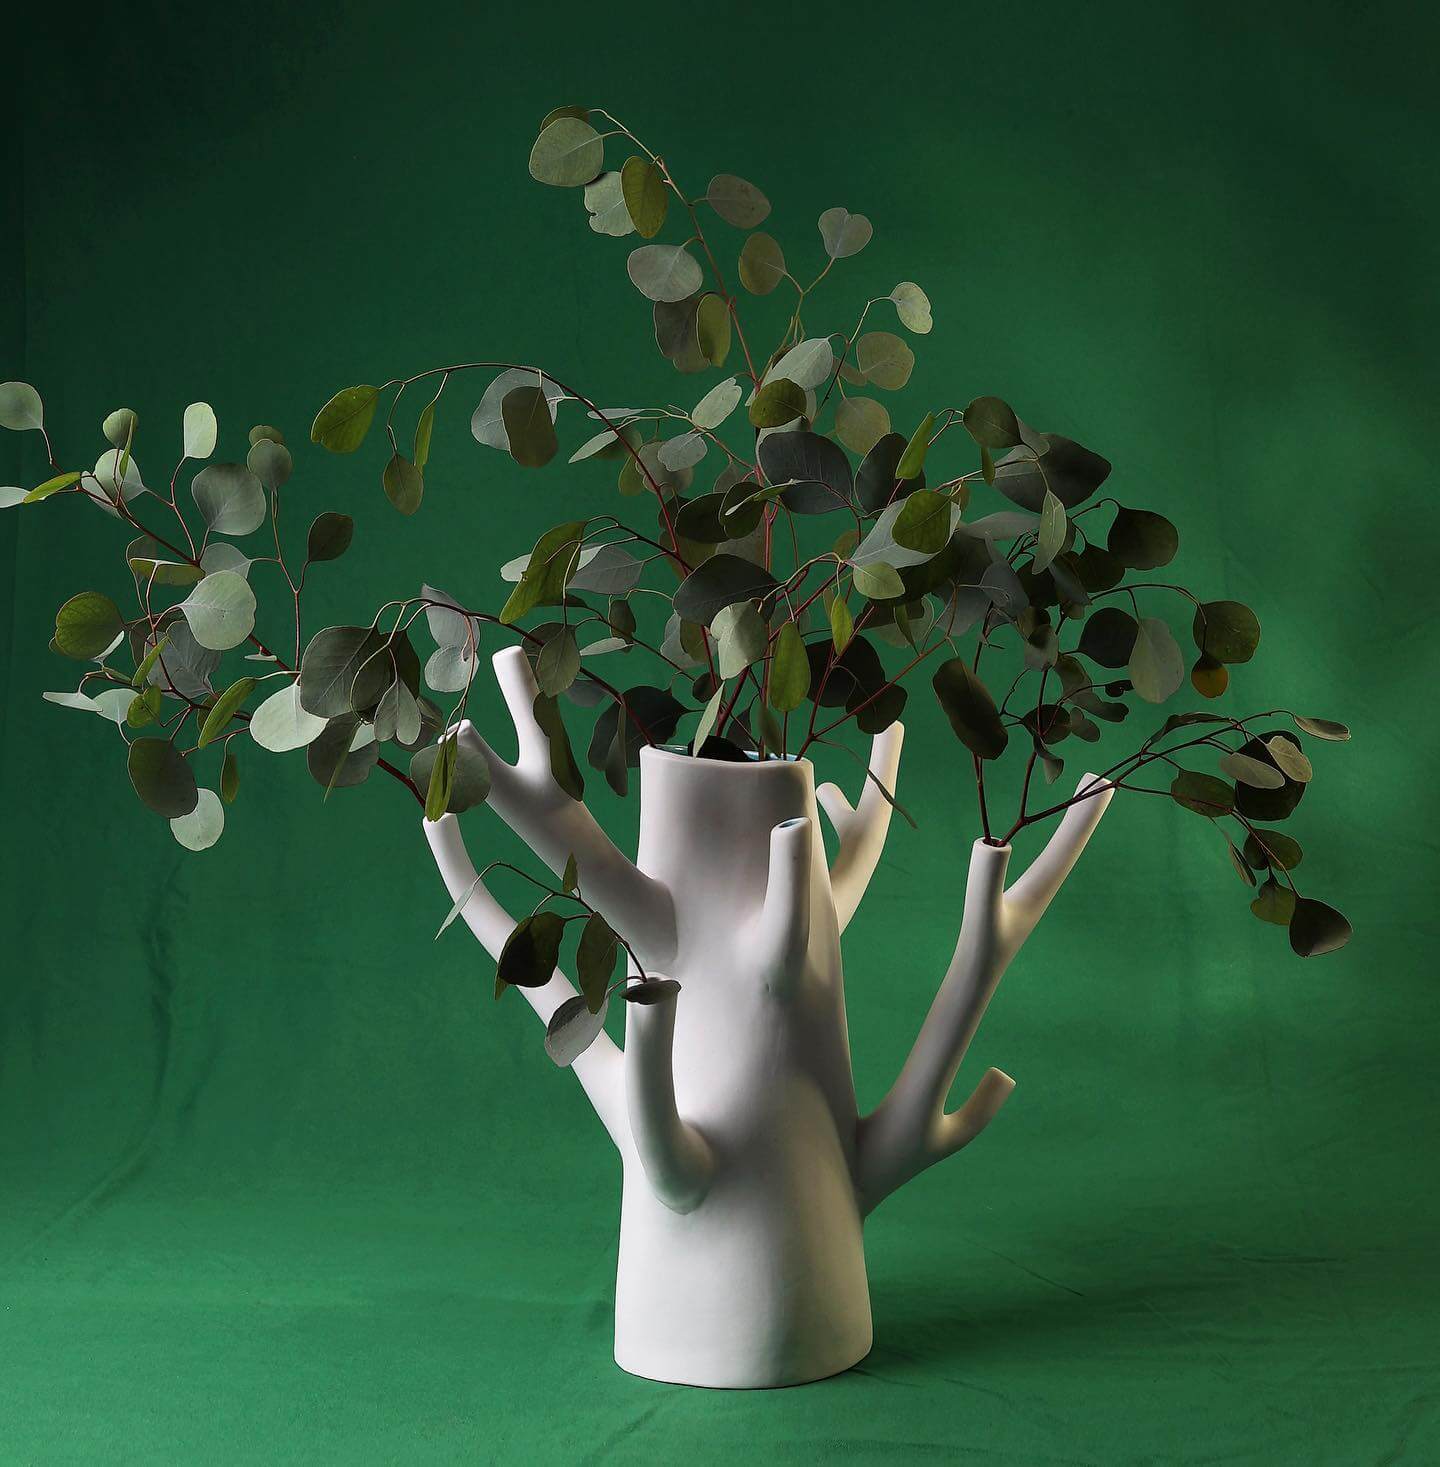 Modern Ceramic vase that is perfect for bouquets & flower arrangements